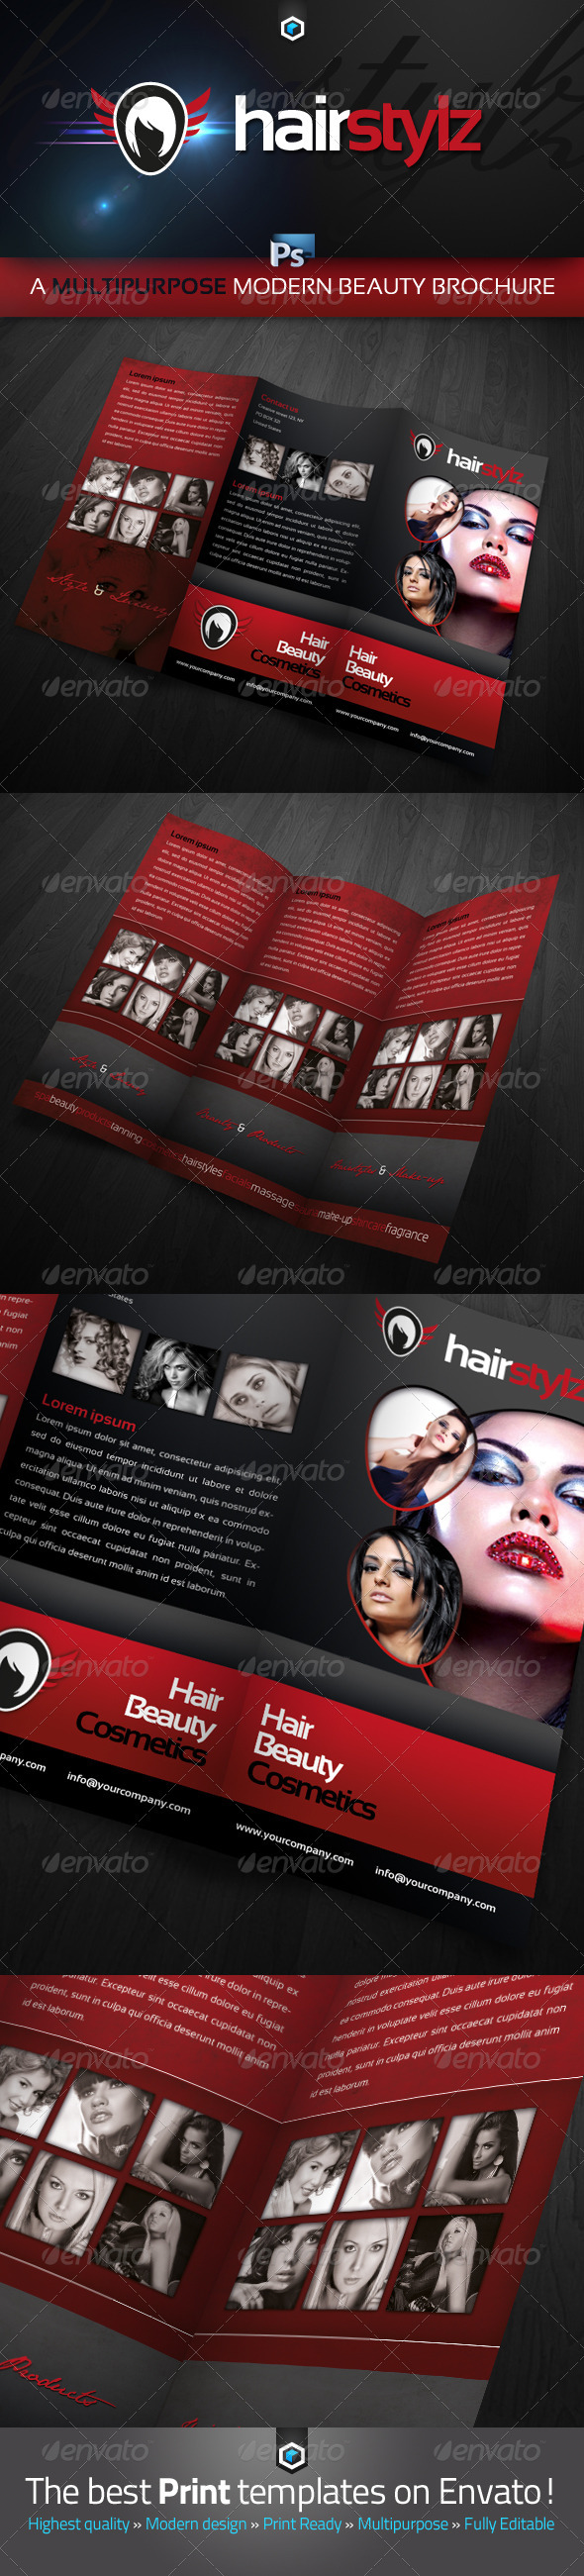 RW Beauty Hairsalon Trifold Brochure Template